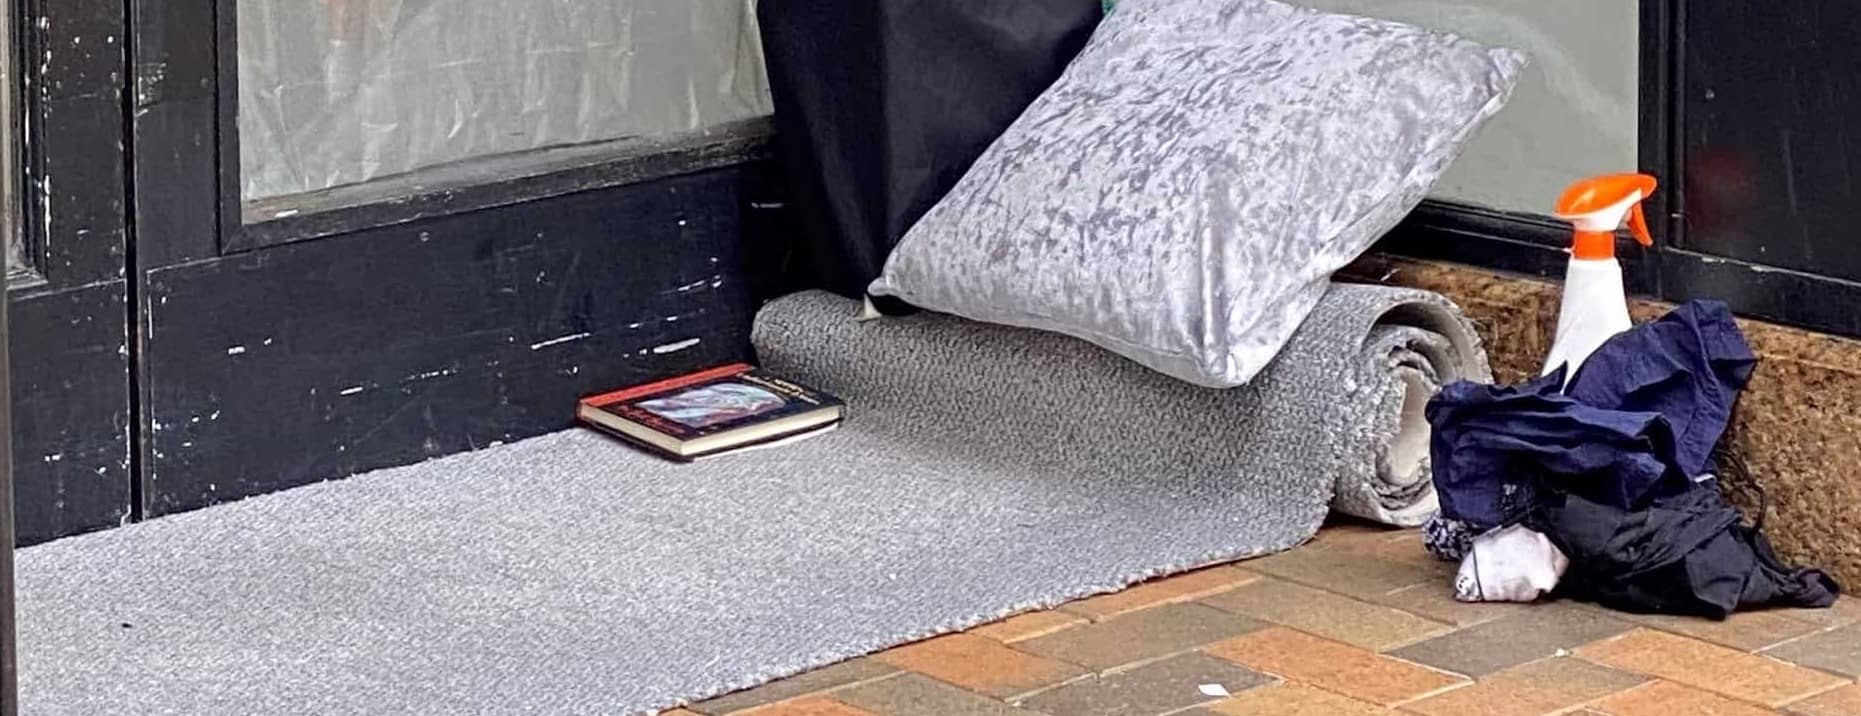 Carpet roll on ground